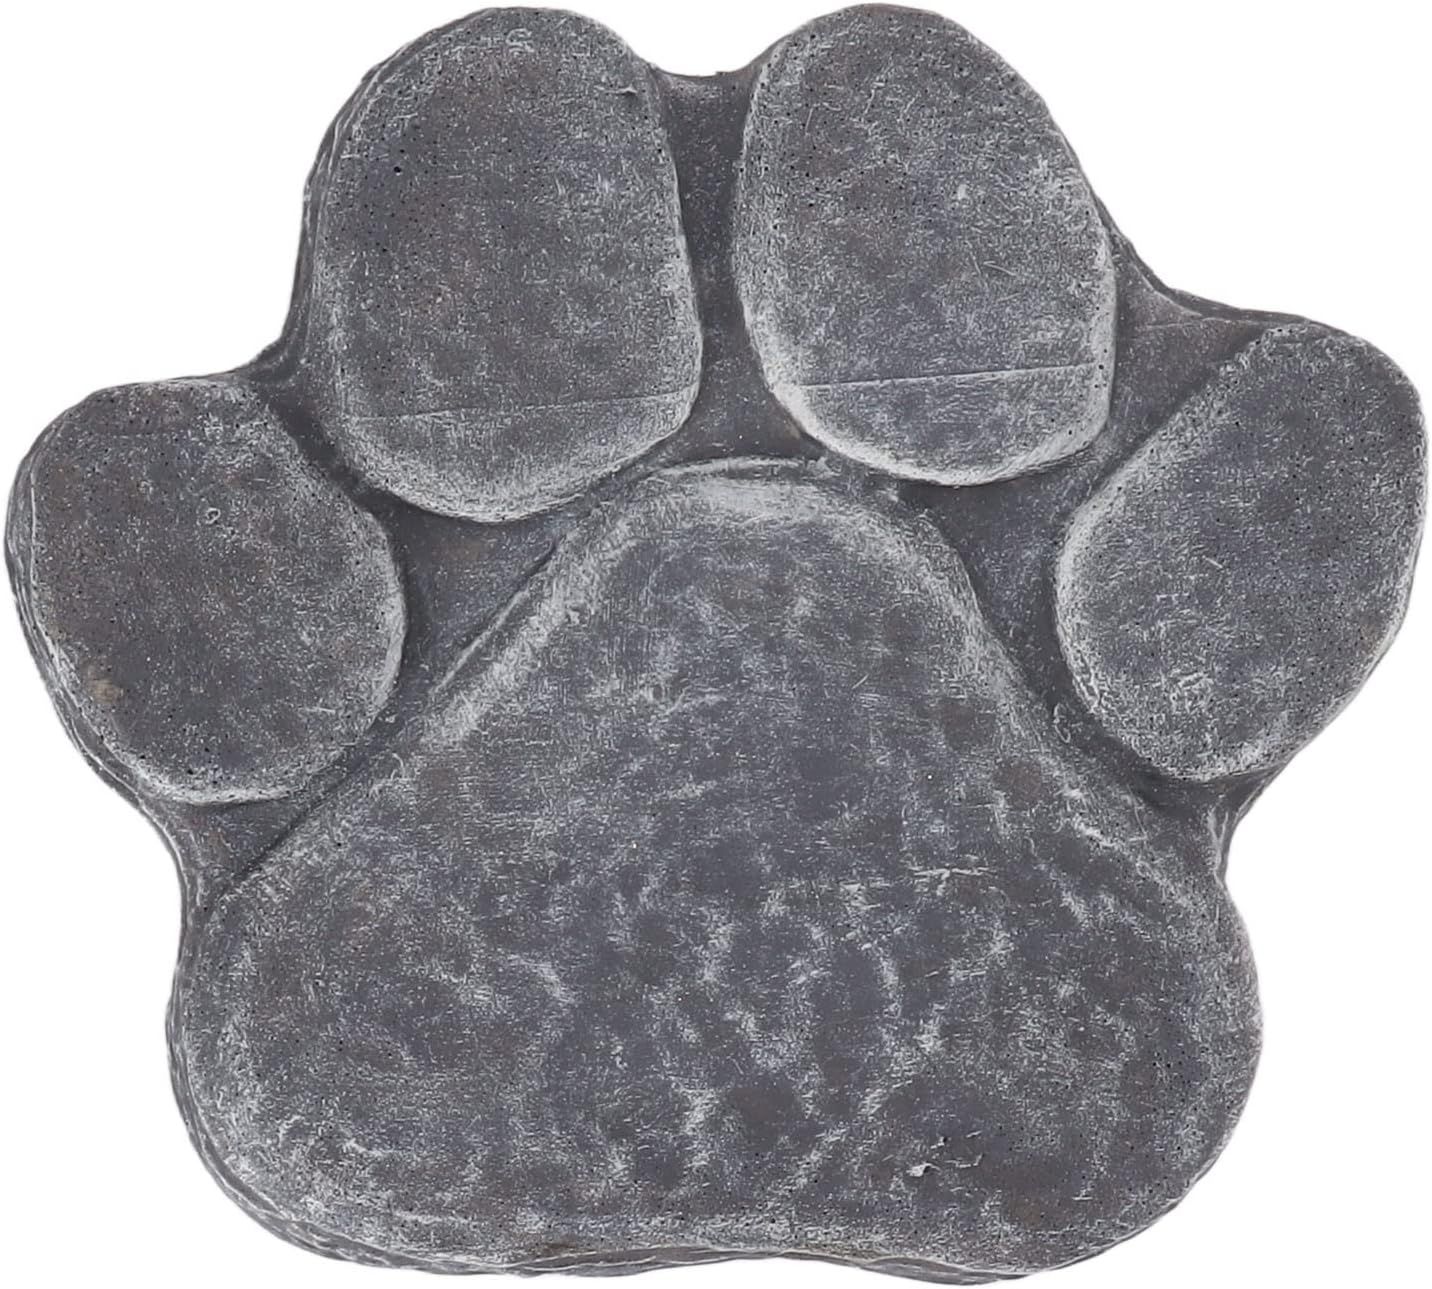 Diy Lettrage Dog Grave Marker Personnalisé Diy Pet Memorial Stone Marker Pet Supplies Pet Memorial Garden Stone For Outdoor Lawn Patio (Gris Roche)